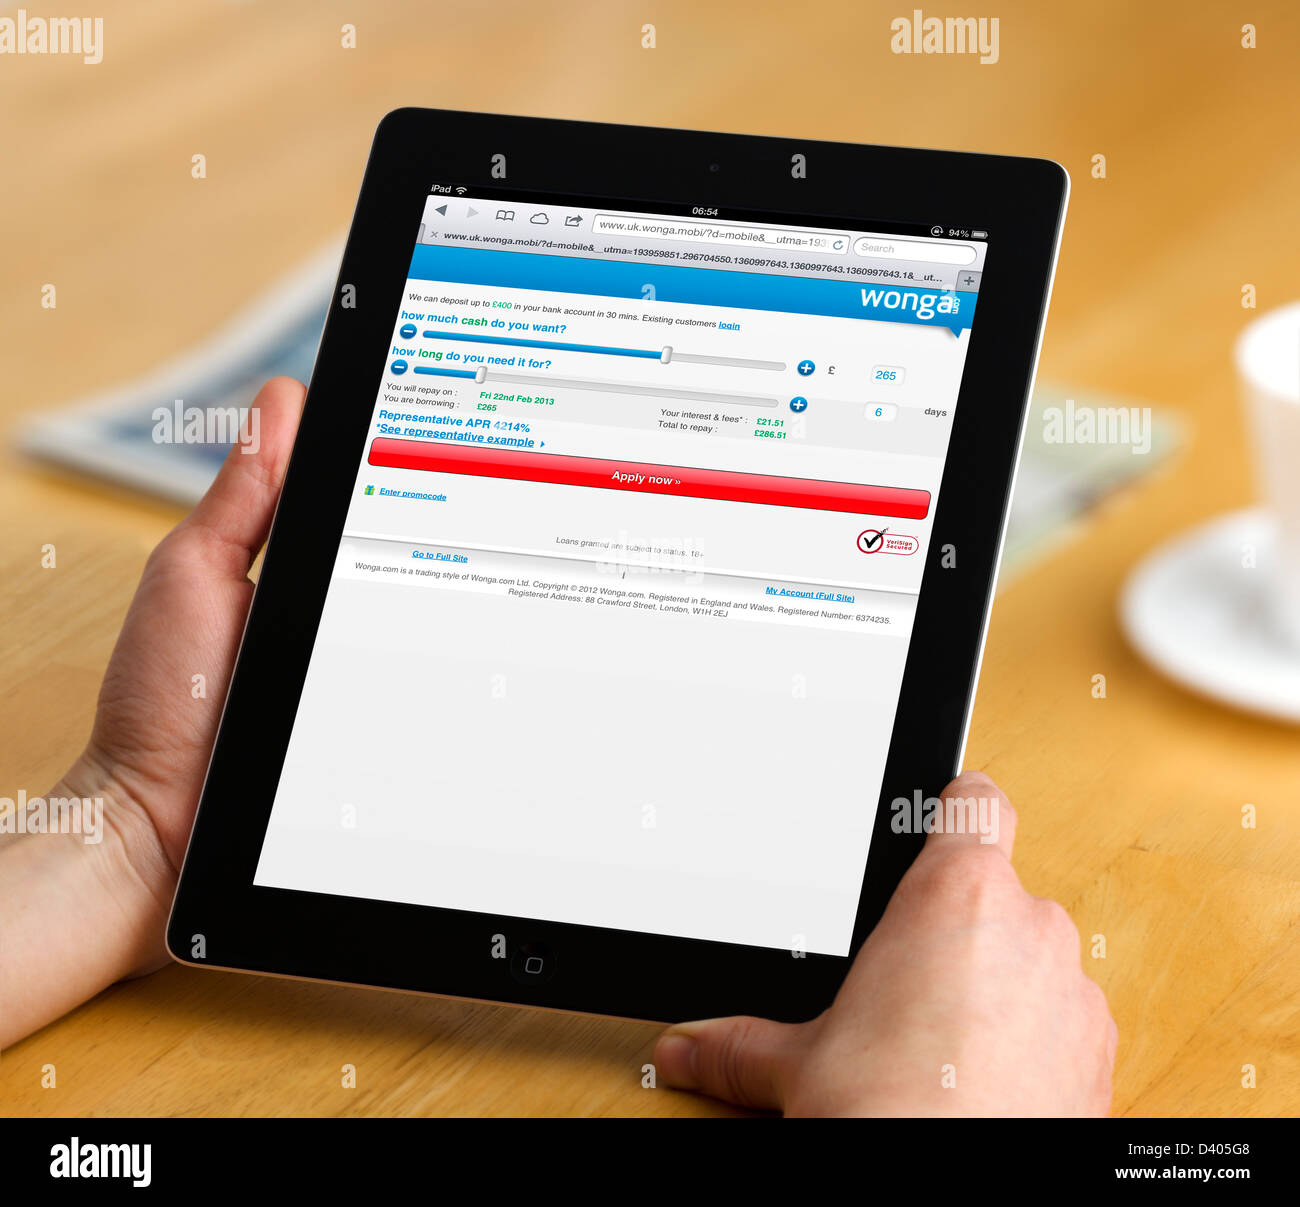 Loan application calculator on the Wonga.com paday loan site viewed on a 4th generation iPad, UK Stock Photo